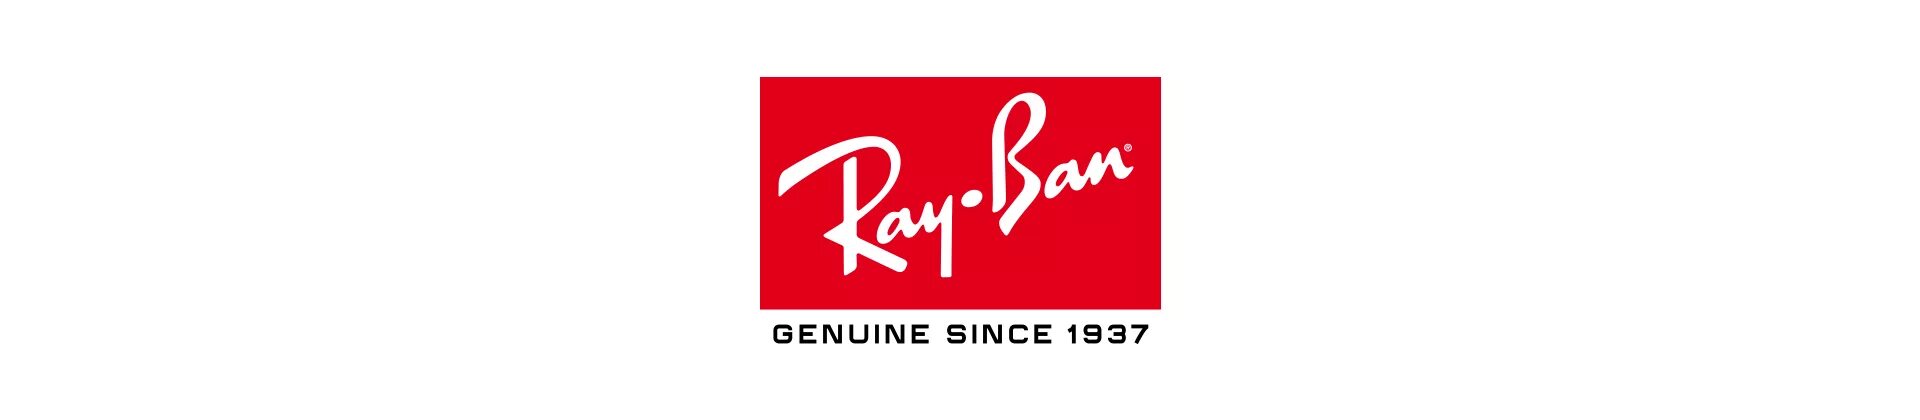 Ban service. Рей Бен логотип. RB логотип. Рай бан лого. Эмблема райбан.